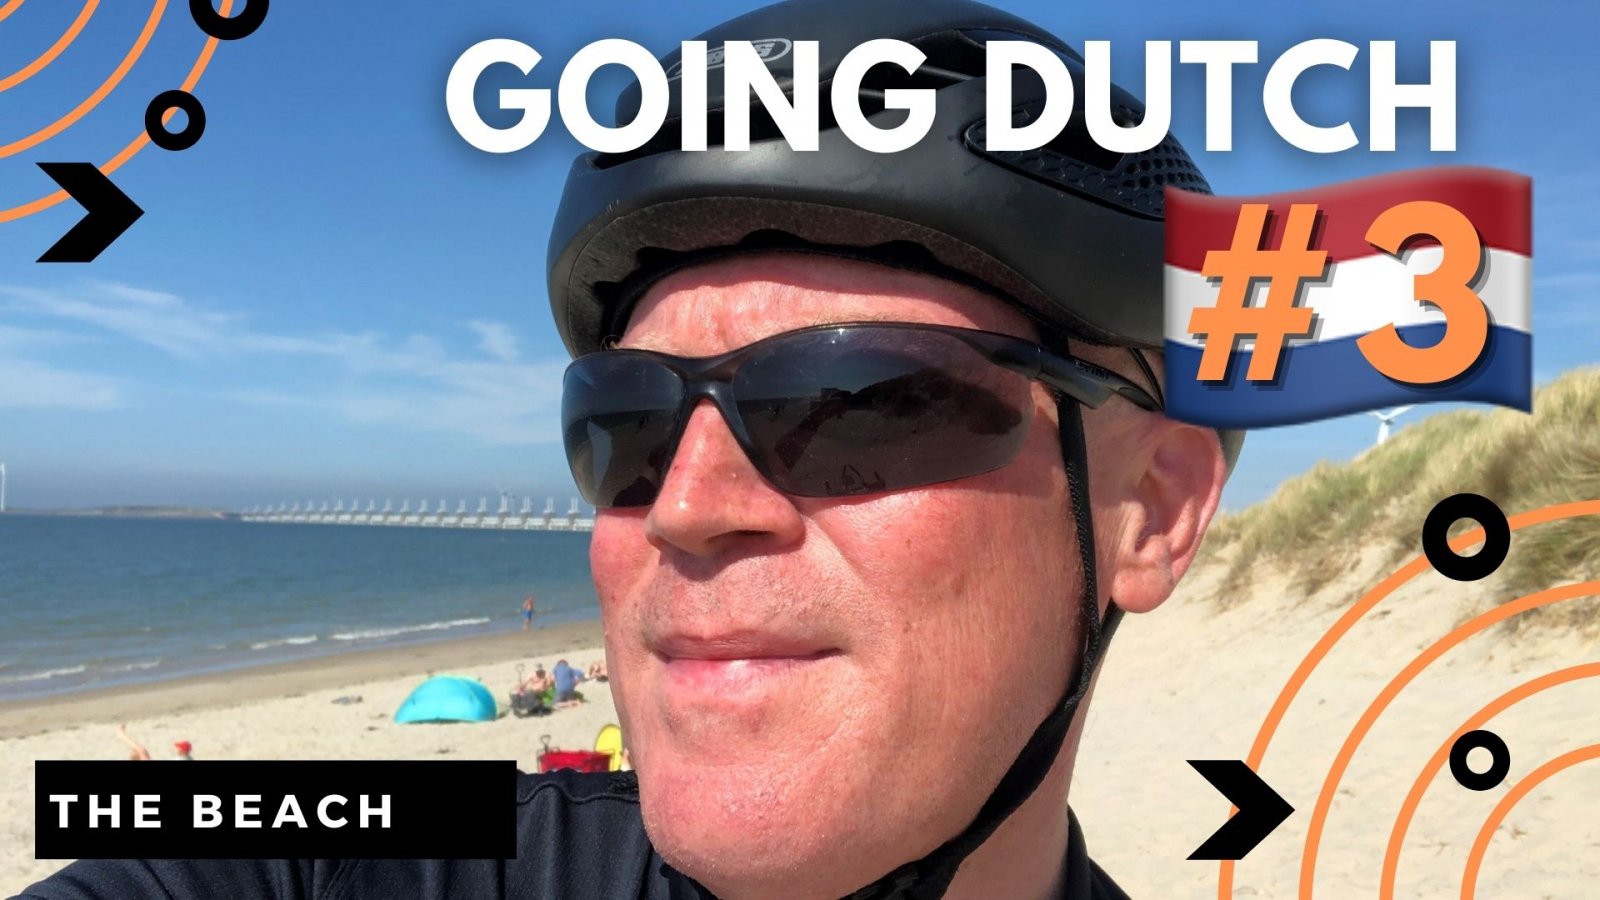 Going Dutch #3 Thumbnail.jpg